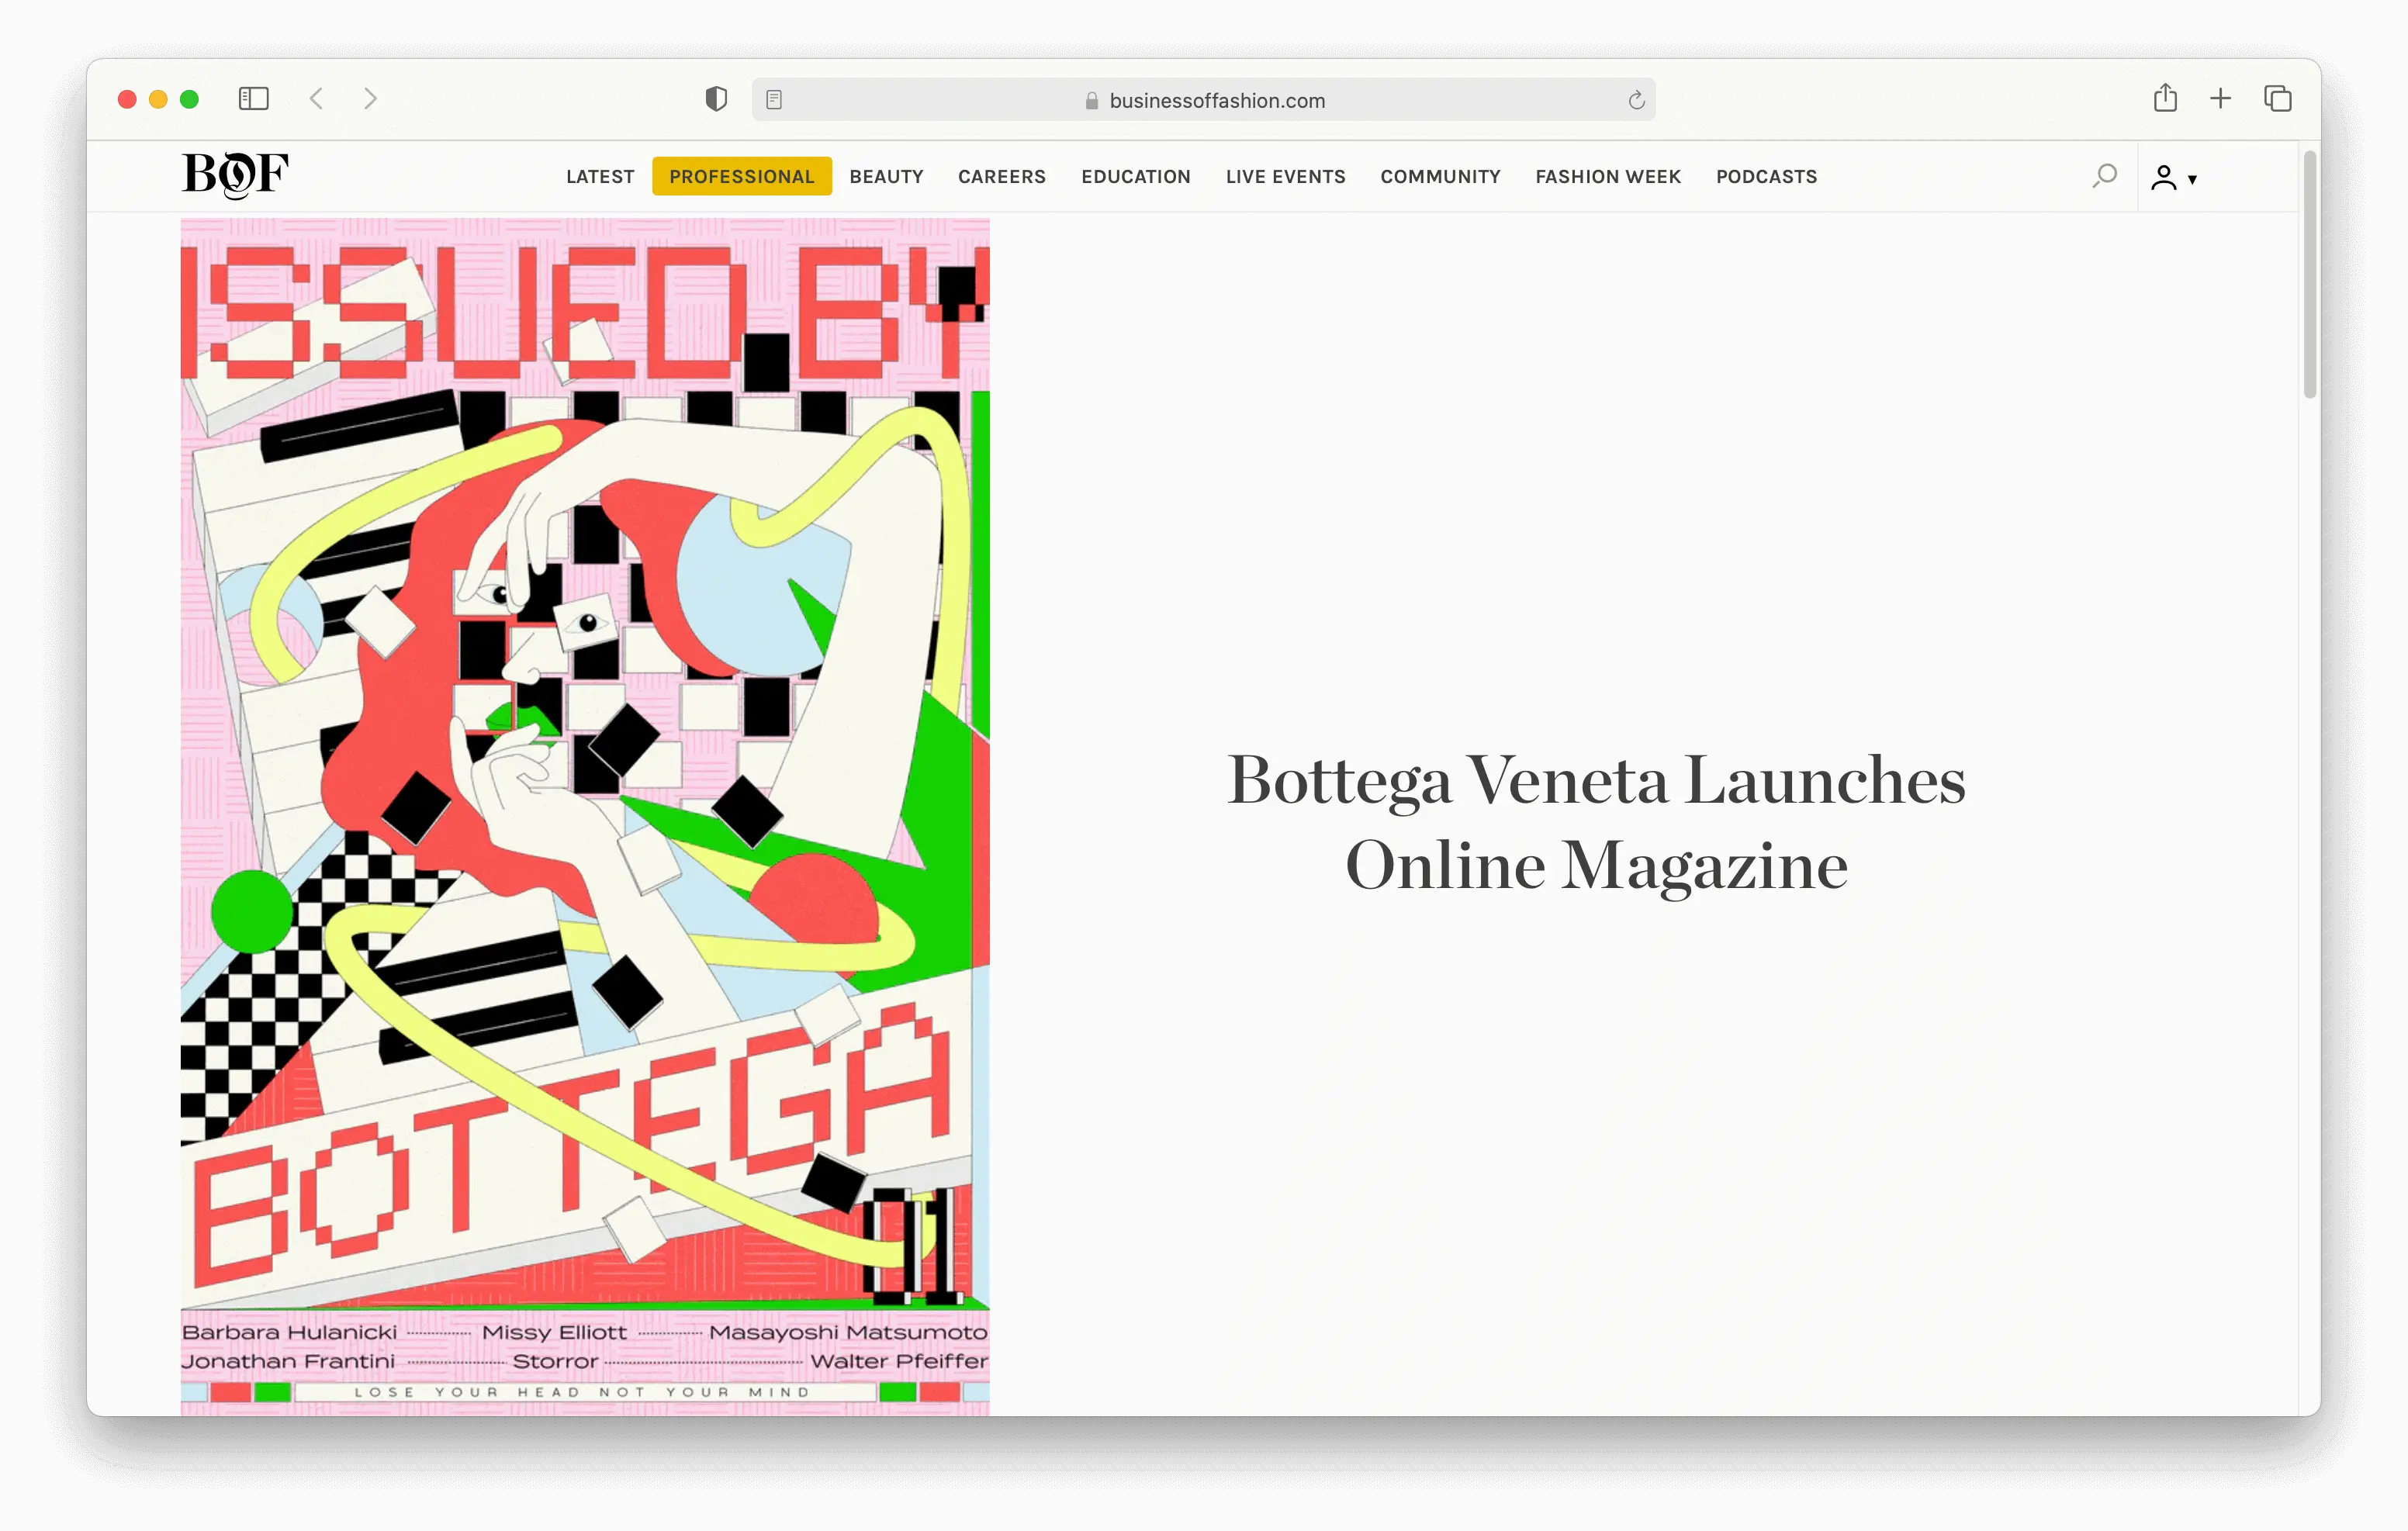 News Article on Bottega Veneta's Announcement